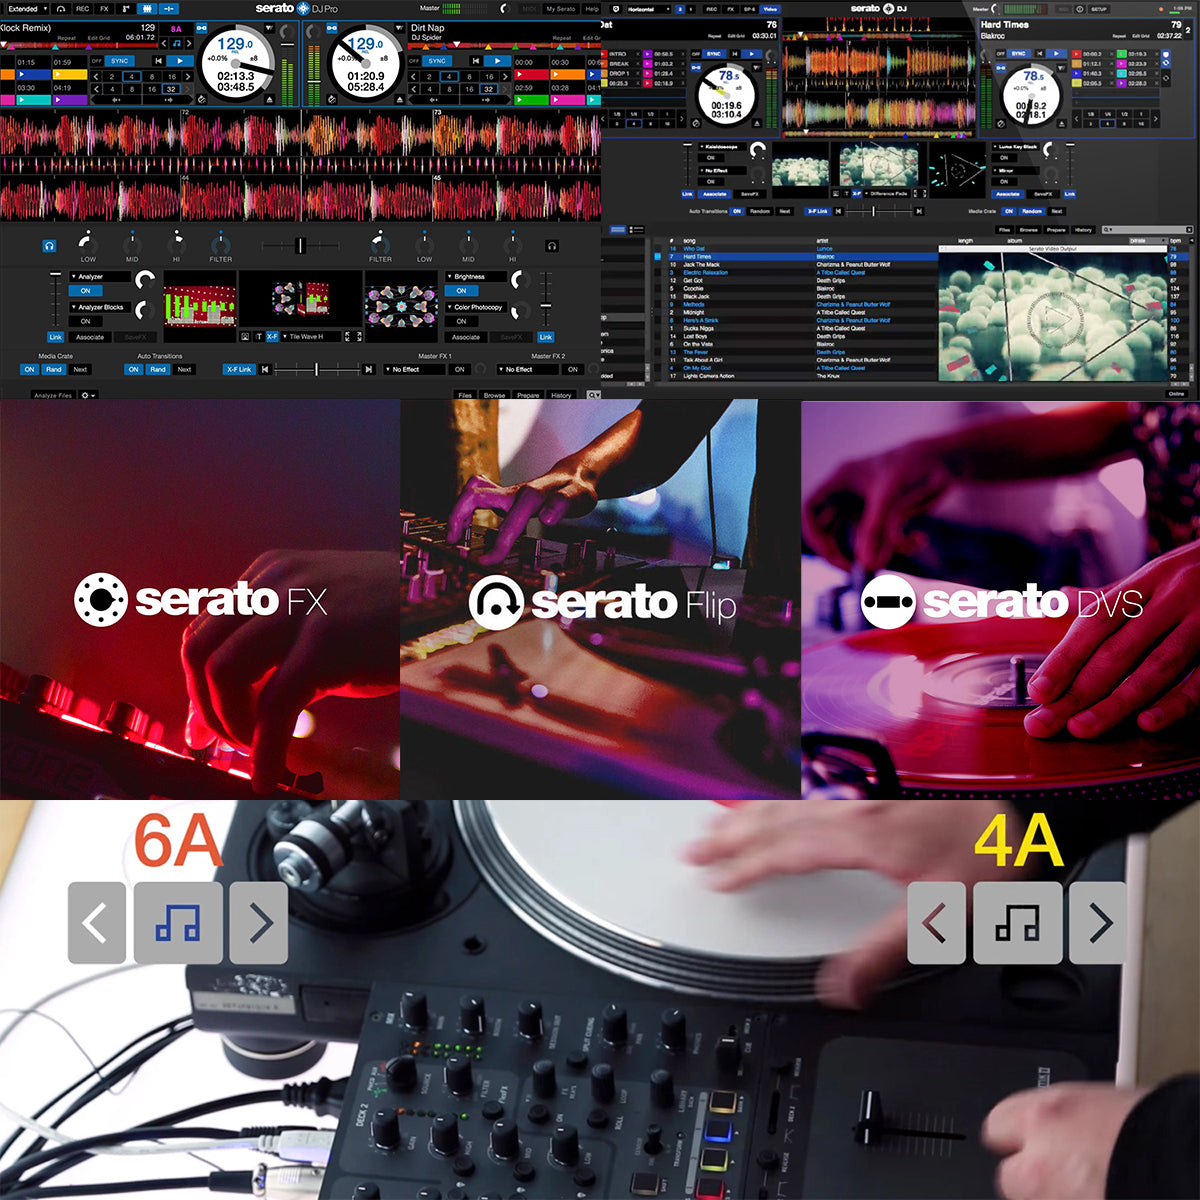 Serato DJ Expansions